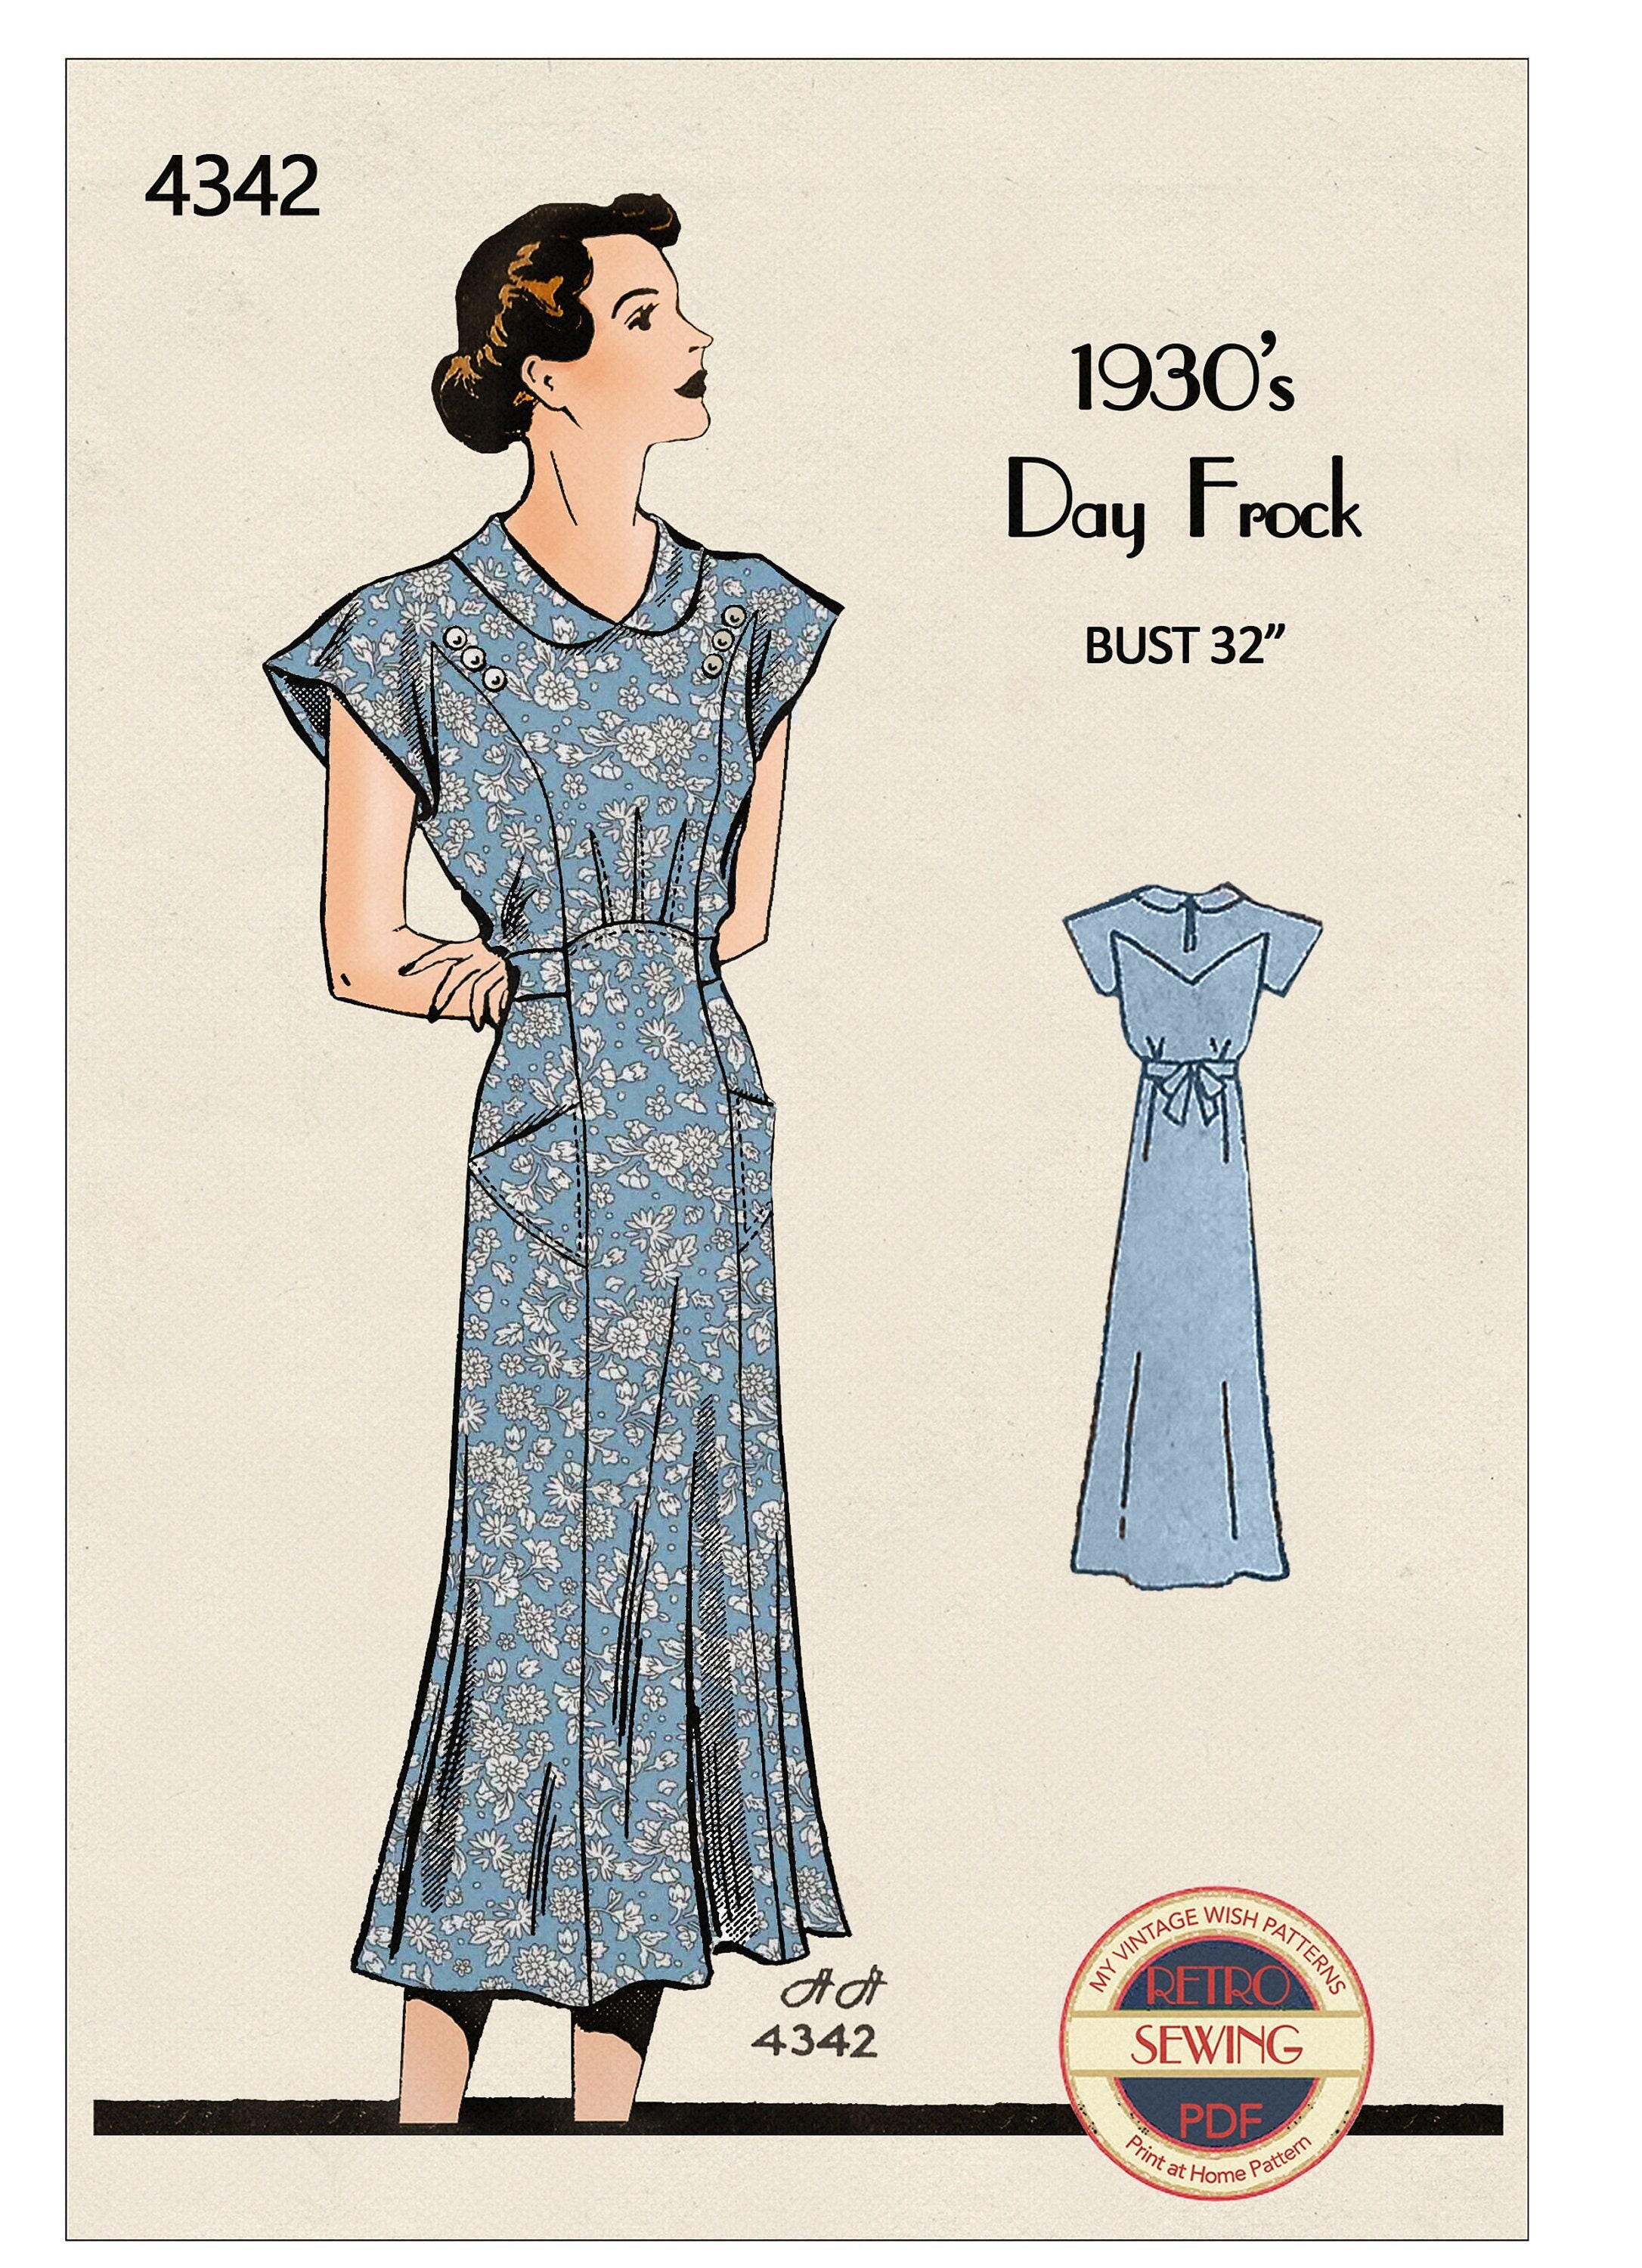 1930s style dress